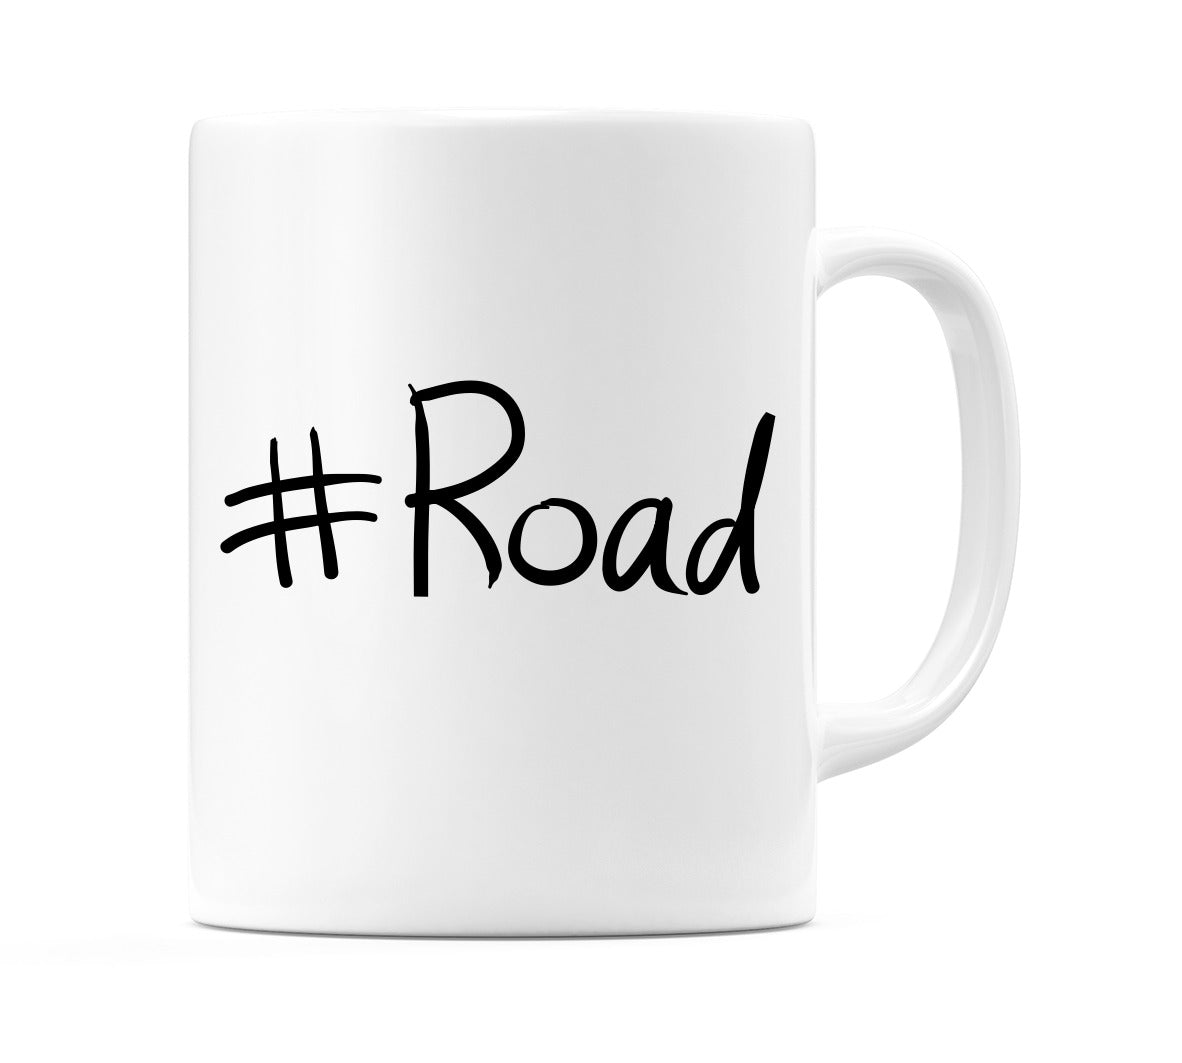 #Road Mug